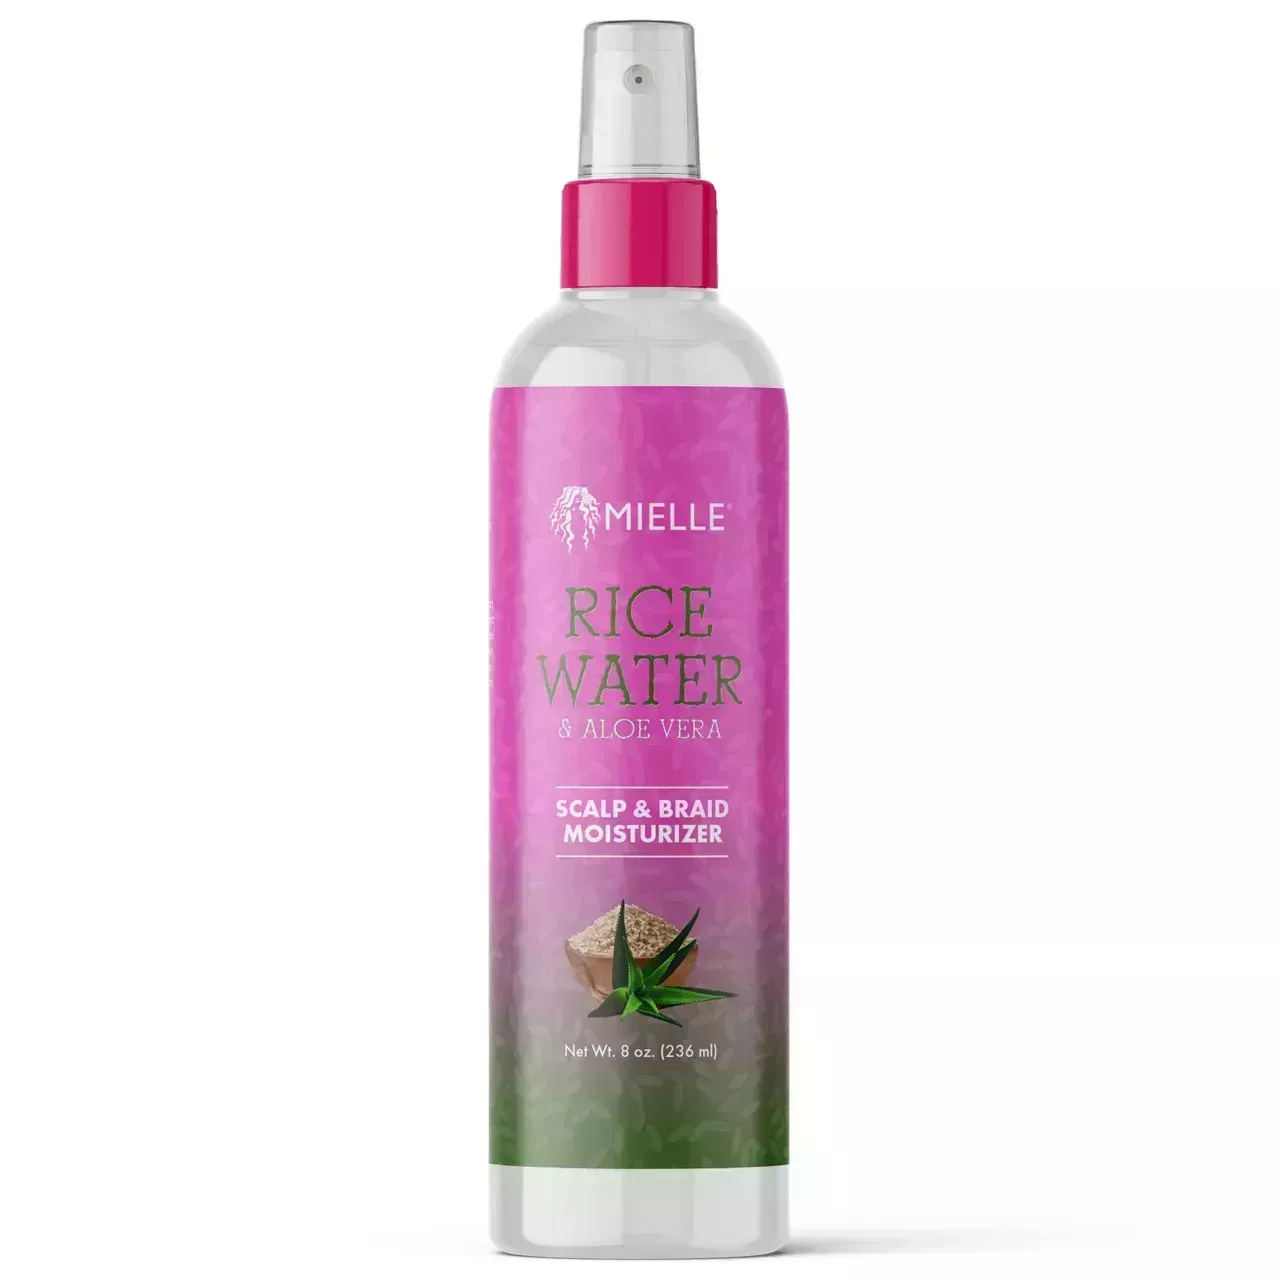 Mielle Organics Rice Water & Aloe Vera Braid & Scalp Moisturizer spray bottle with pink to green gradient label on white background